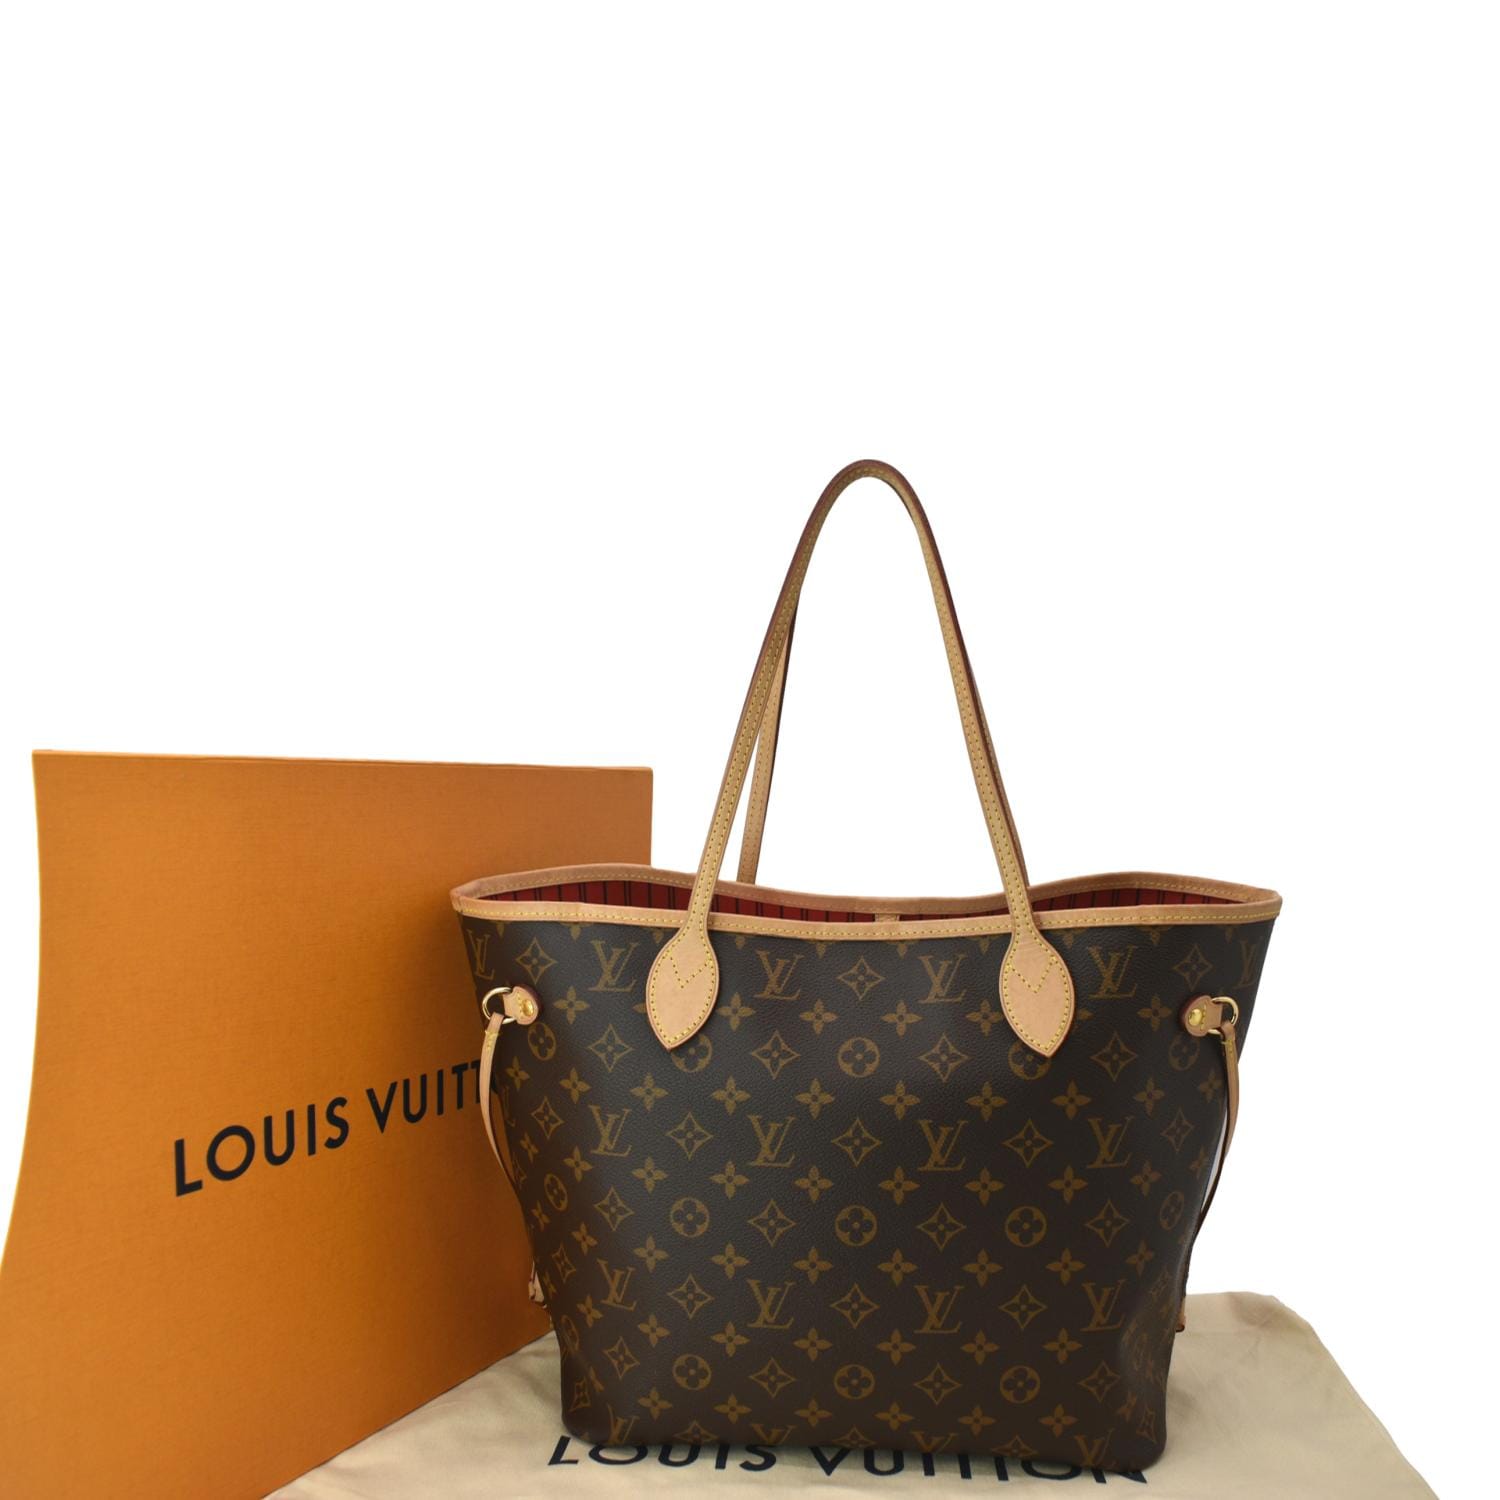 Louis Vuitton V Tote MM Monogram Canvas Tote Bag - DDH